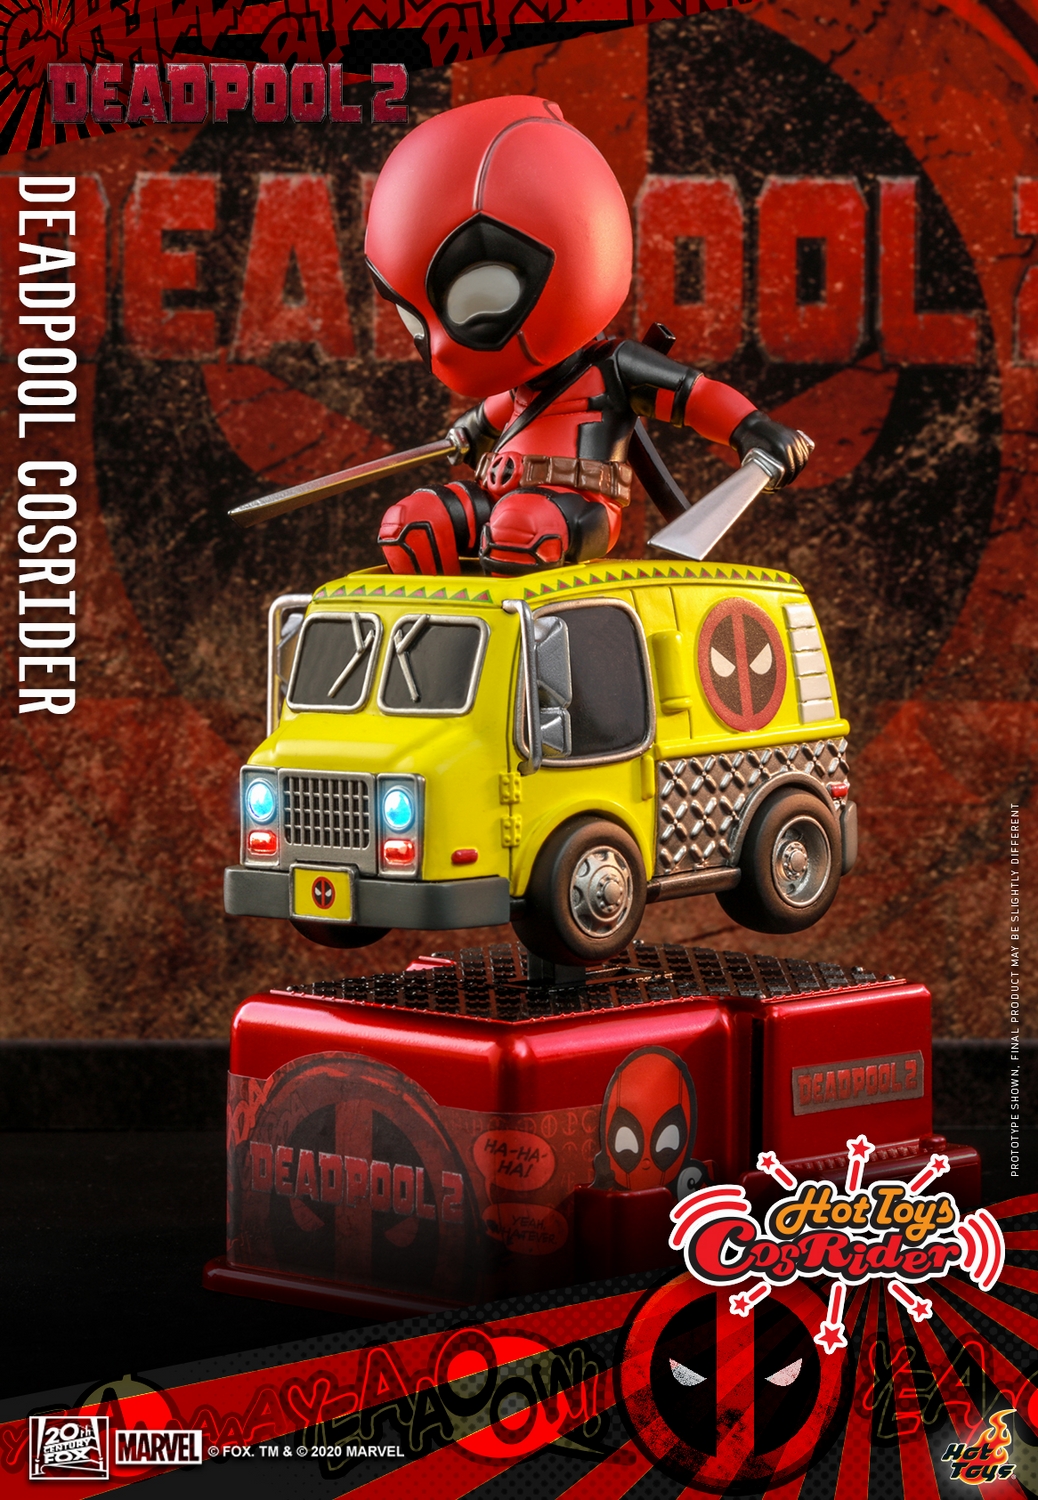 Hot Toys - Deadpool 2 - Deadpool CosRider_PR1.jpg